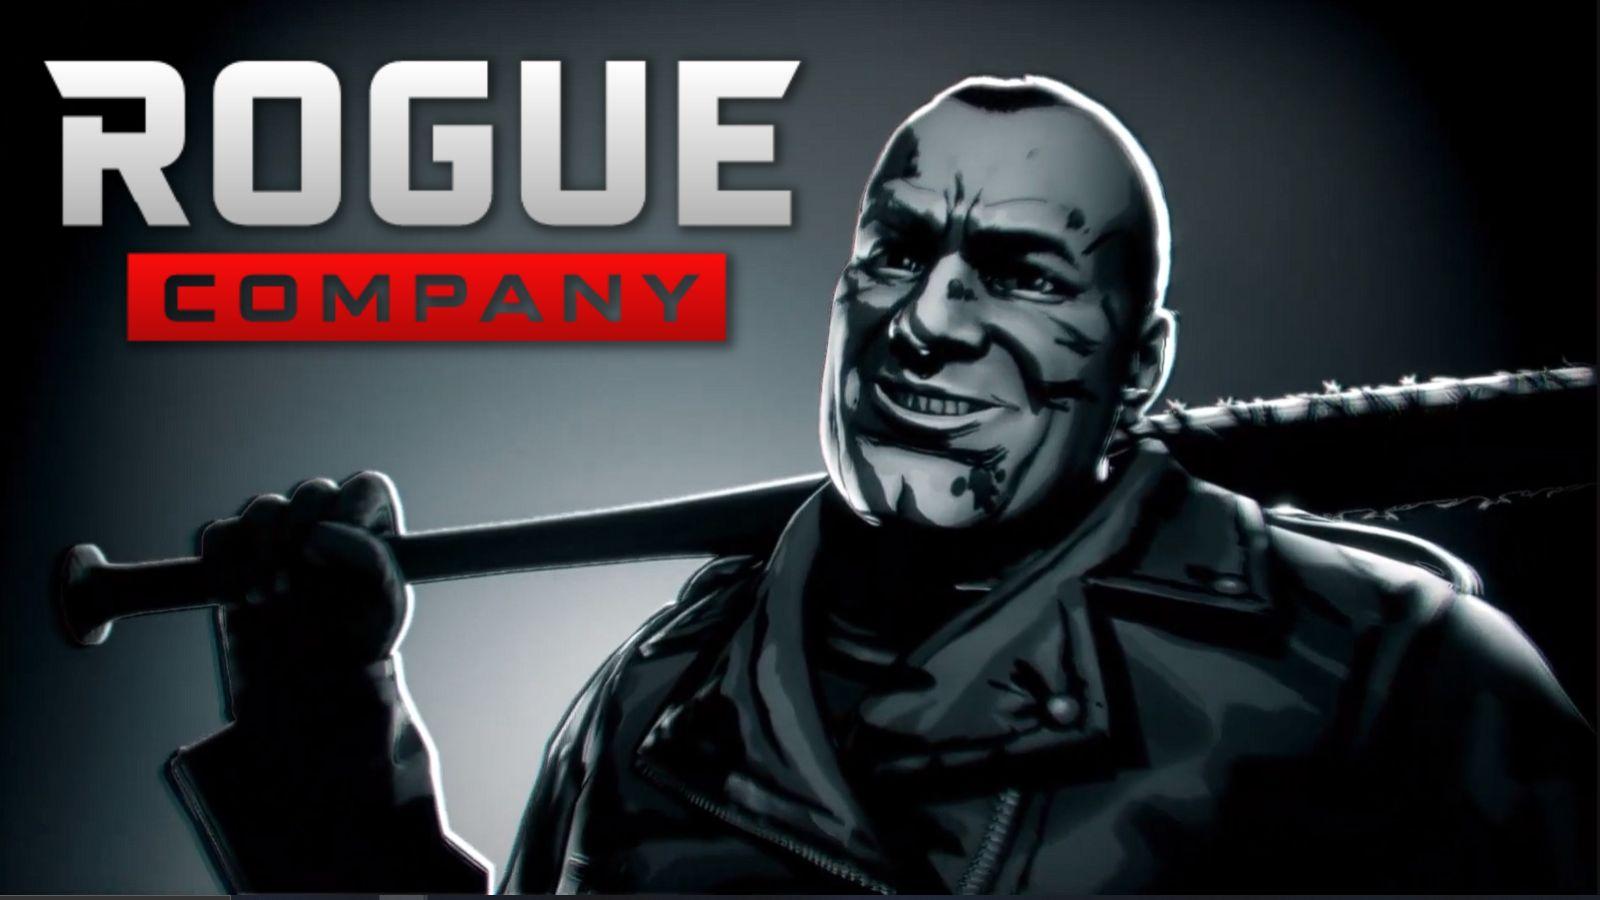 rogue company neegan header image